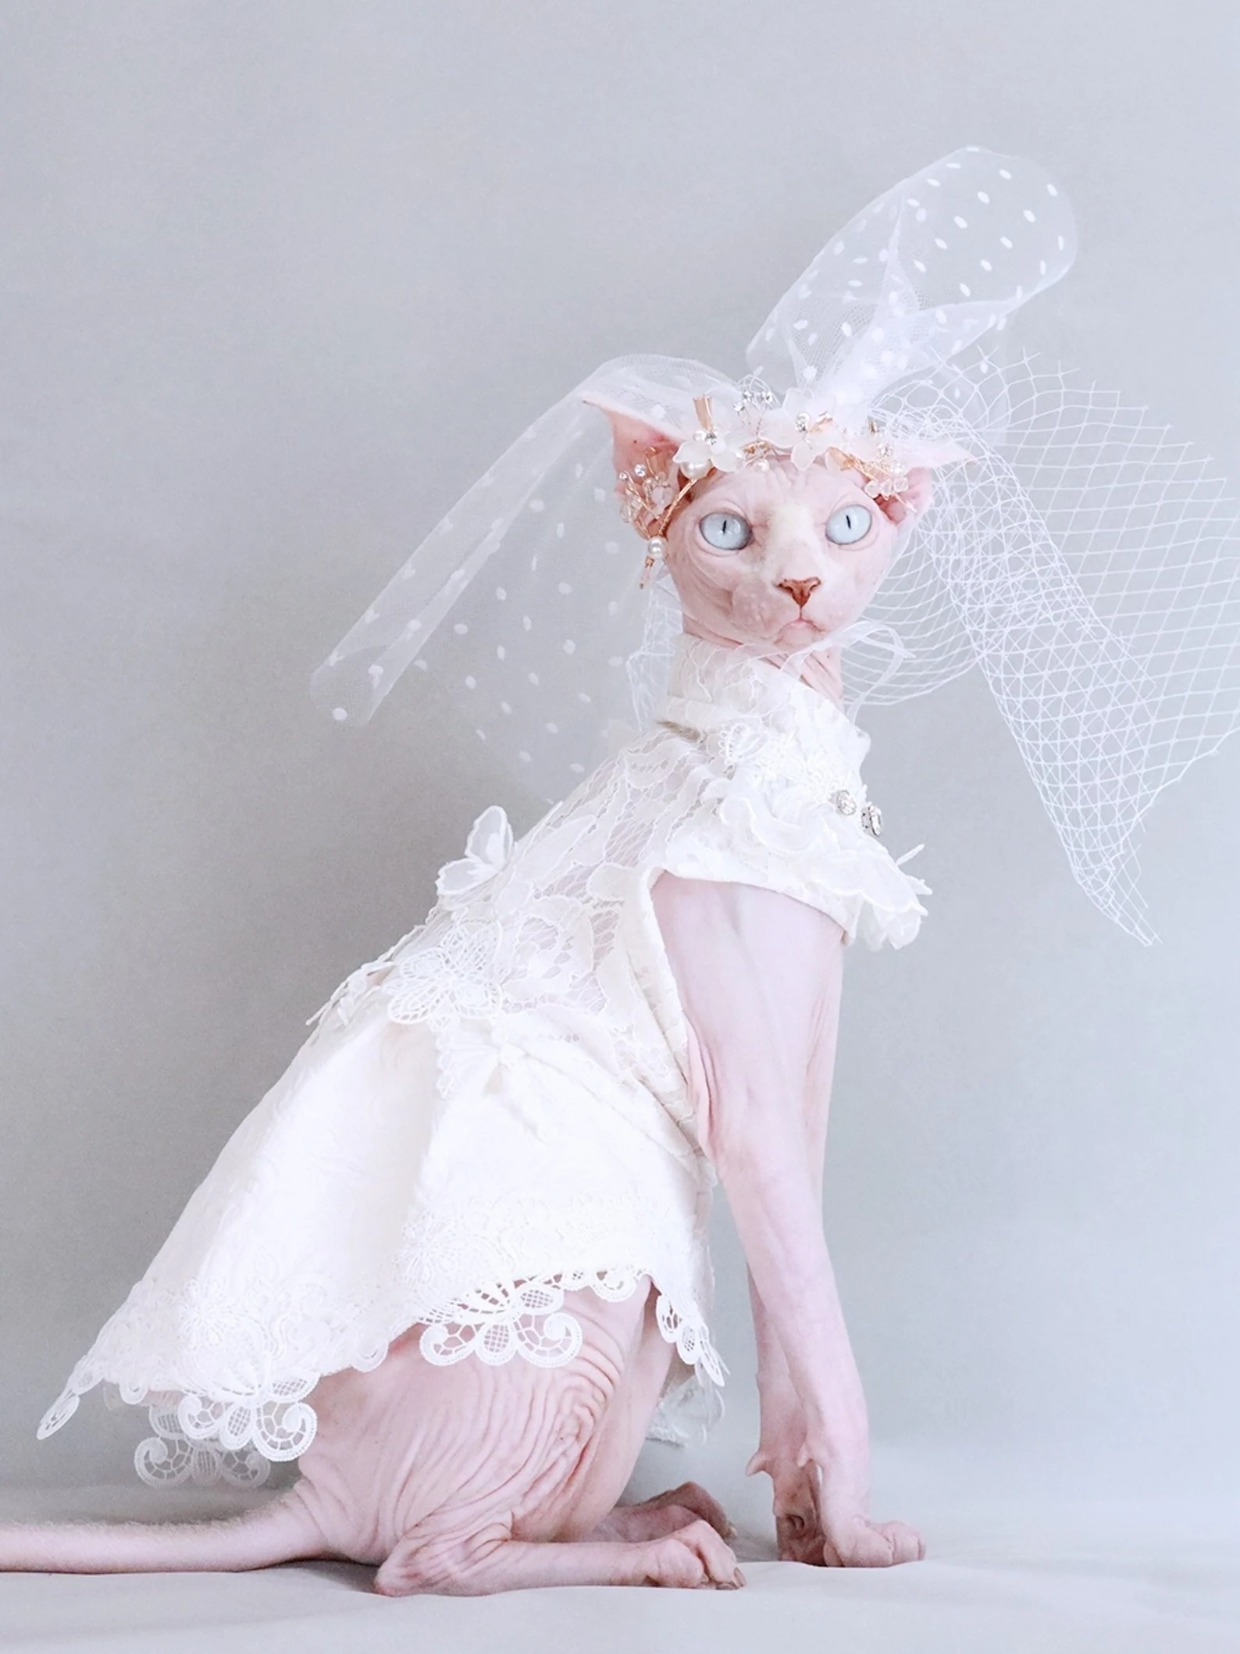 hairless cat wearing a wedding dress and veil